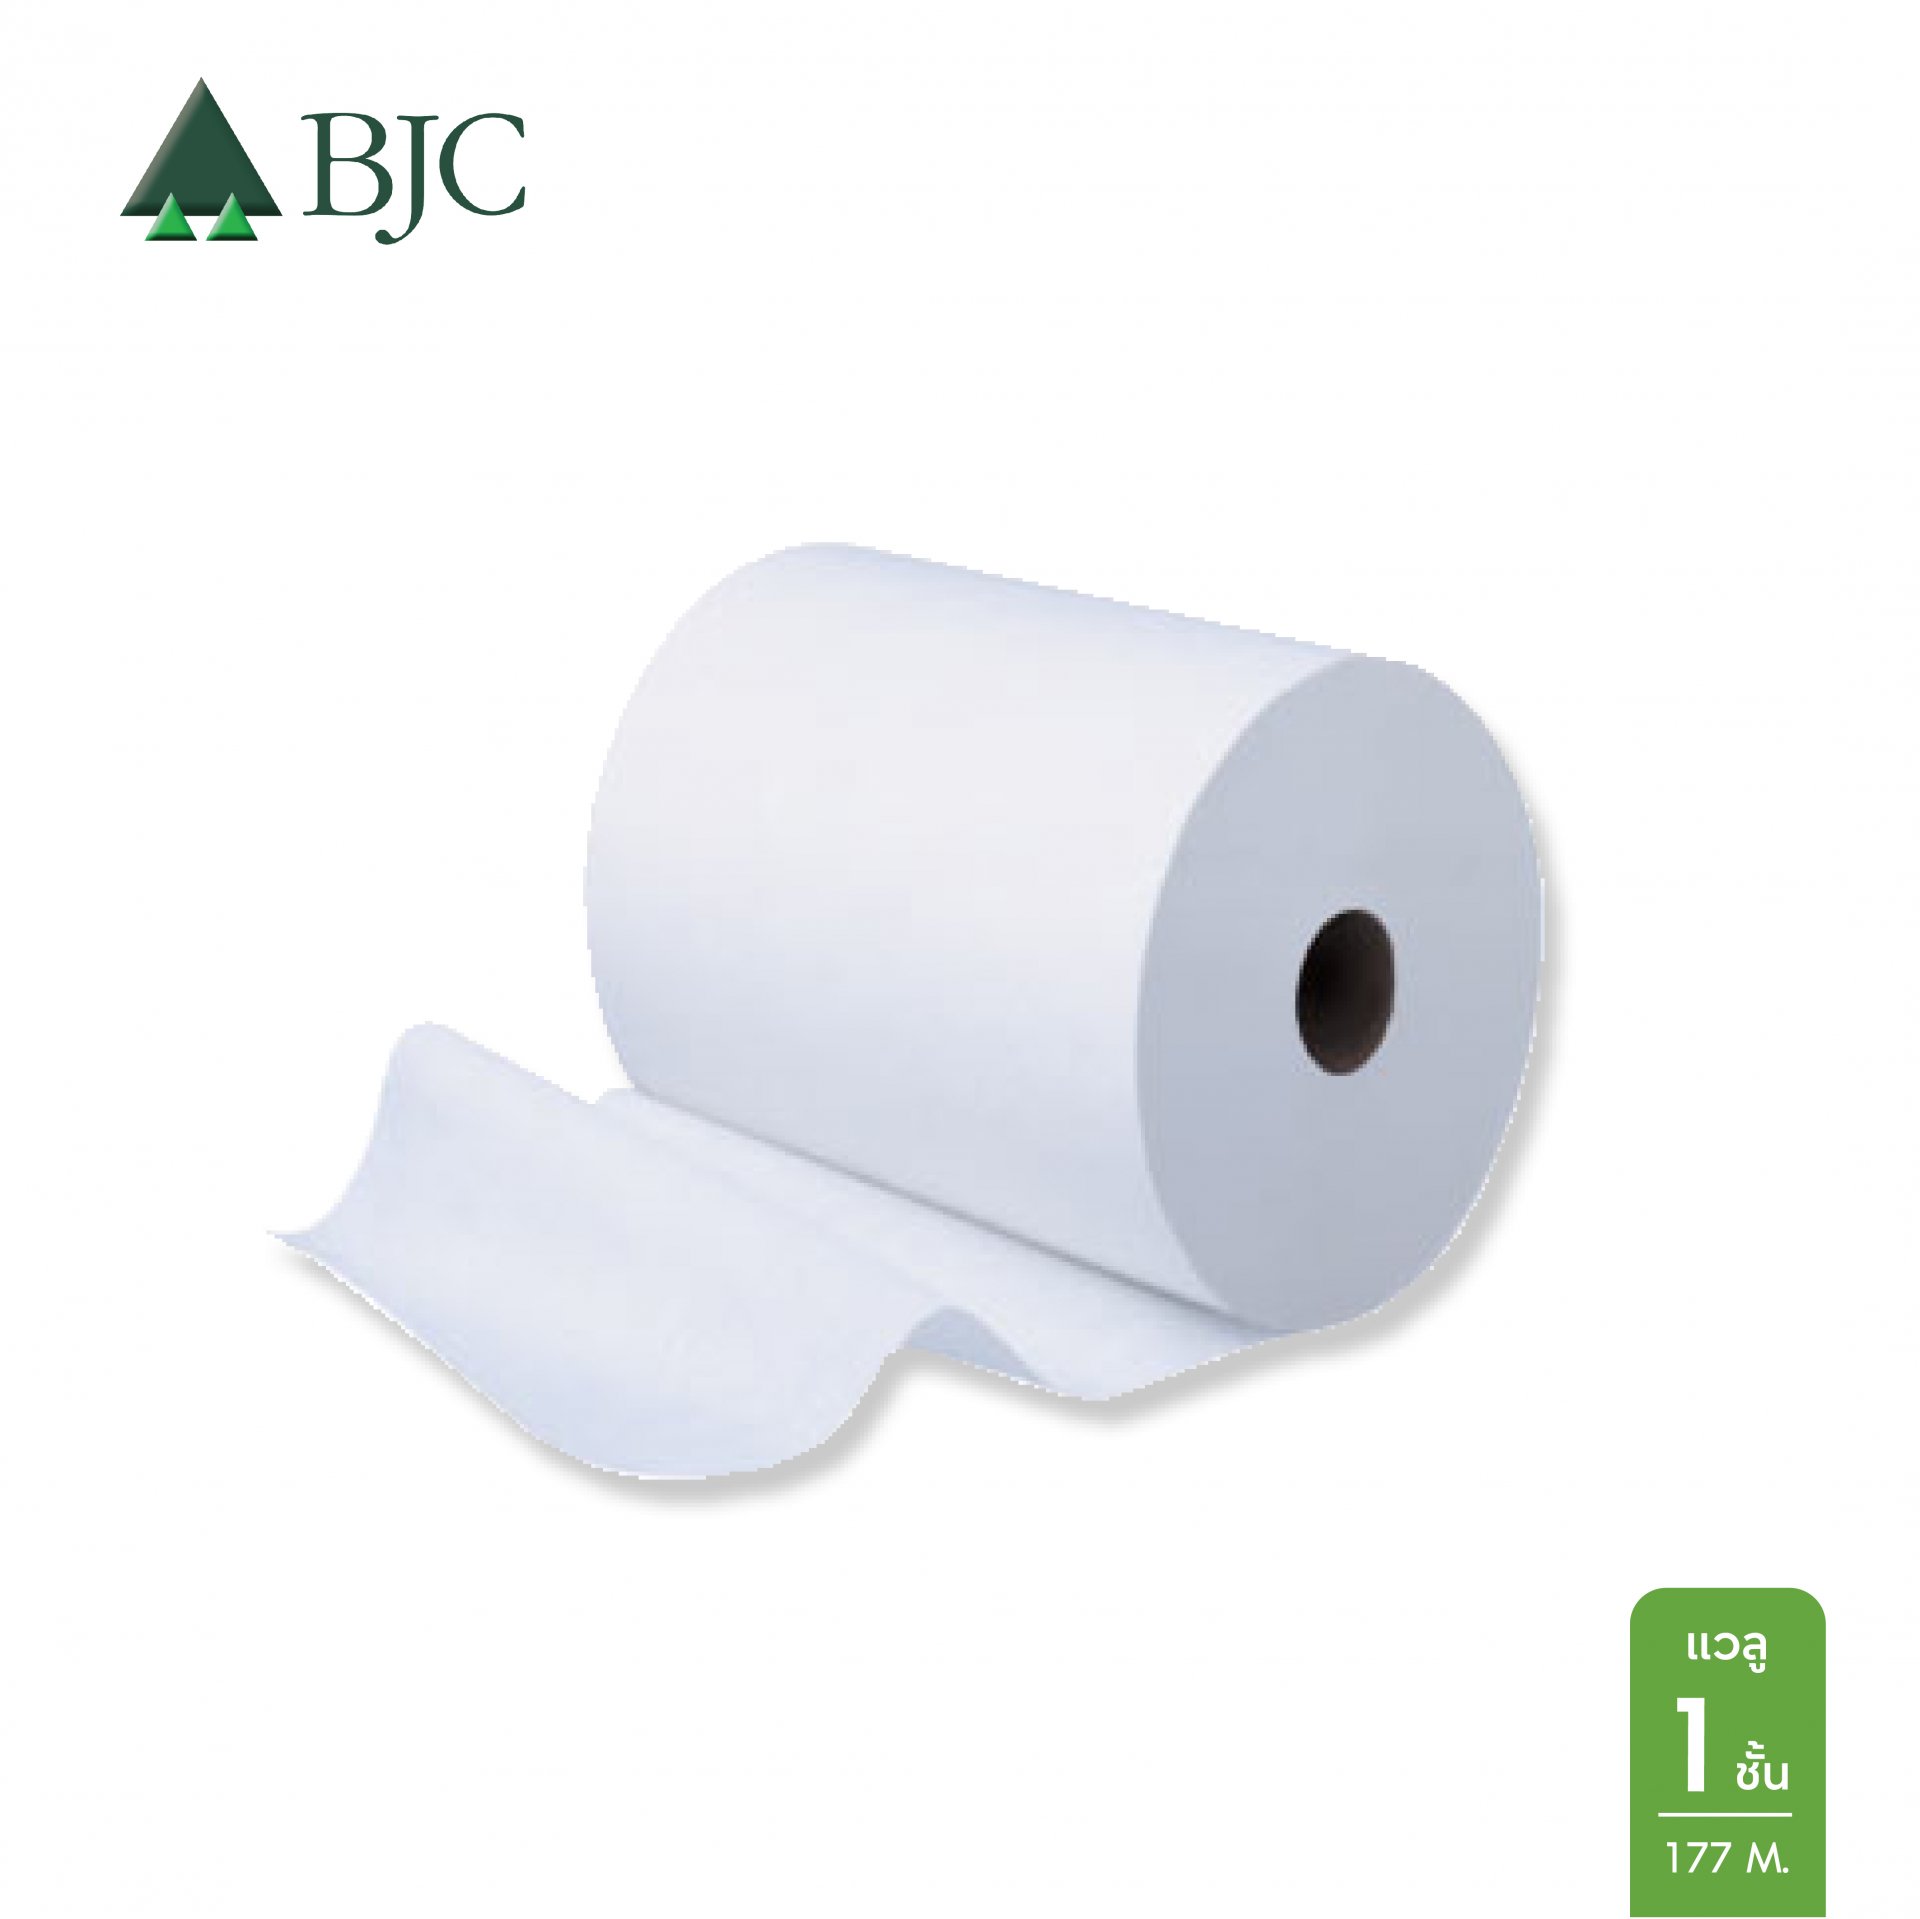 BJC Hygienist Value Roll Hand Towel 1 Ply 177 M.